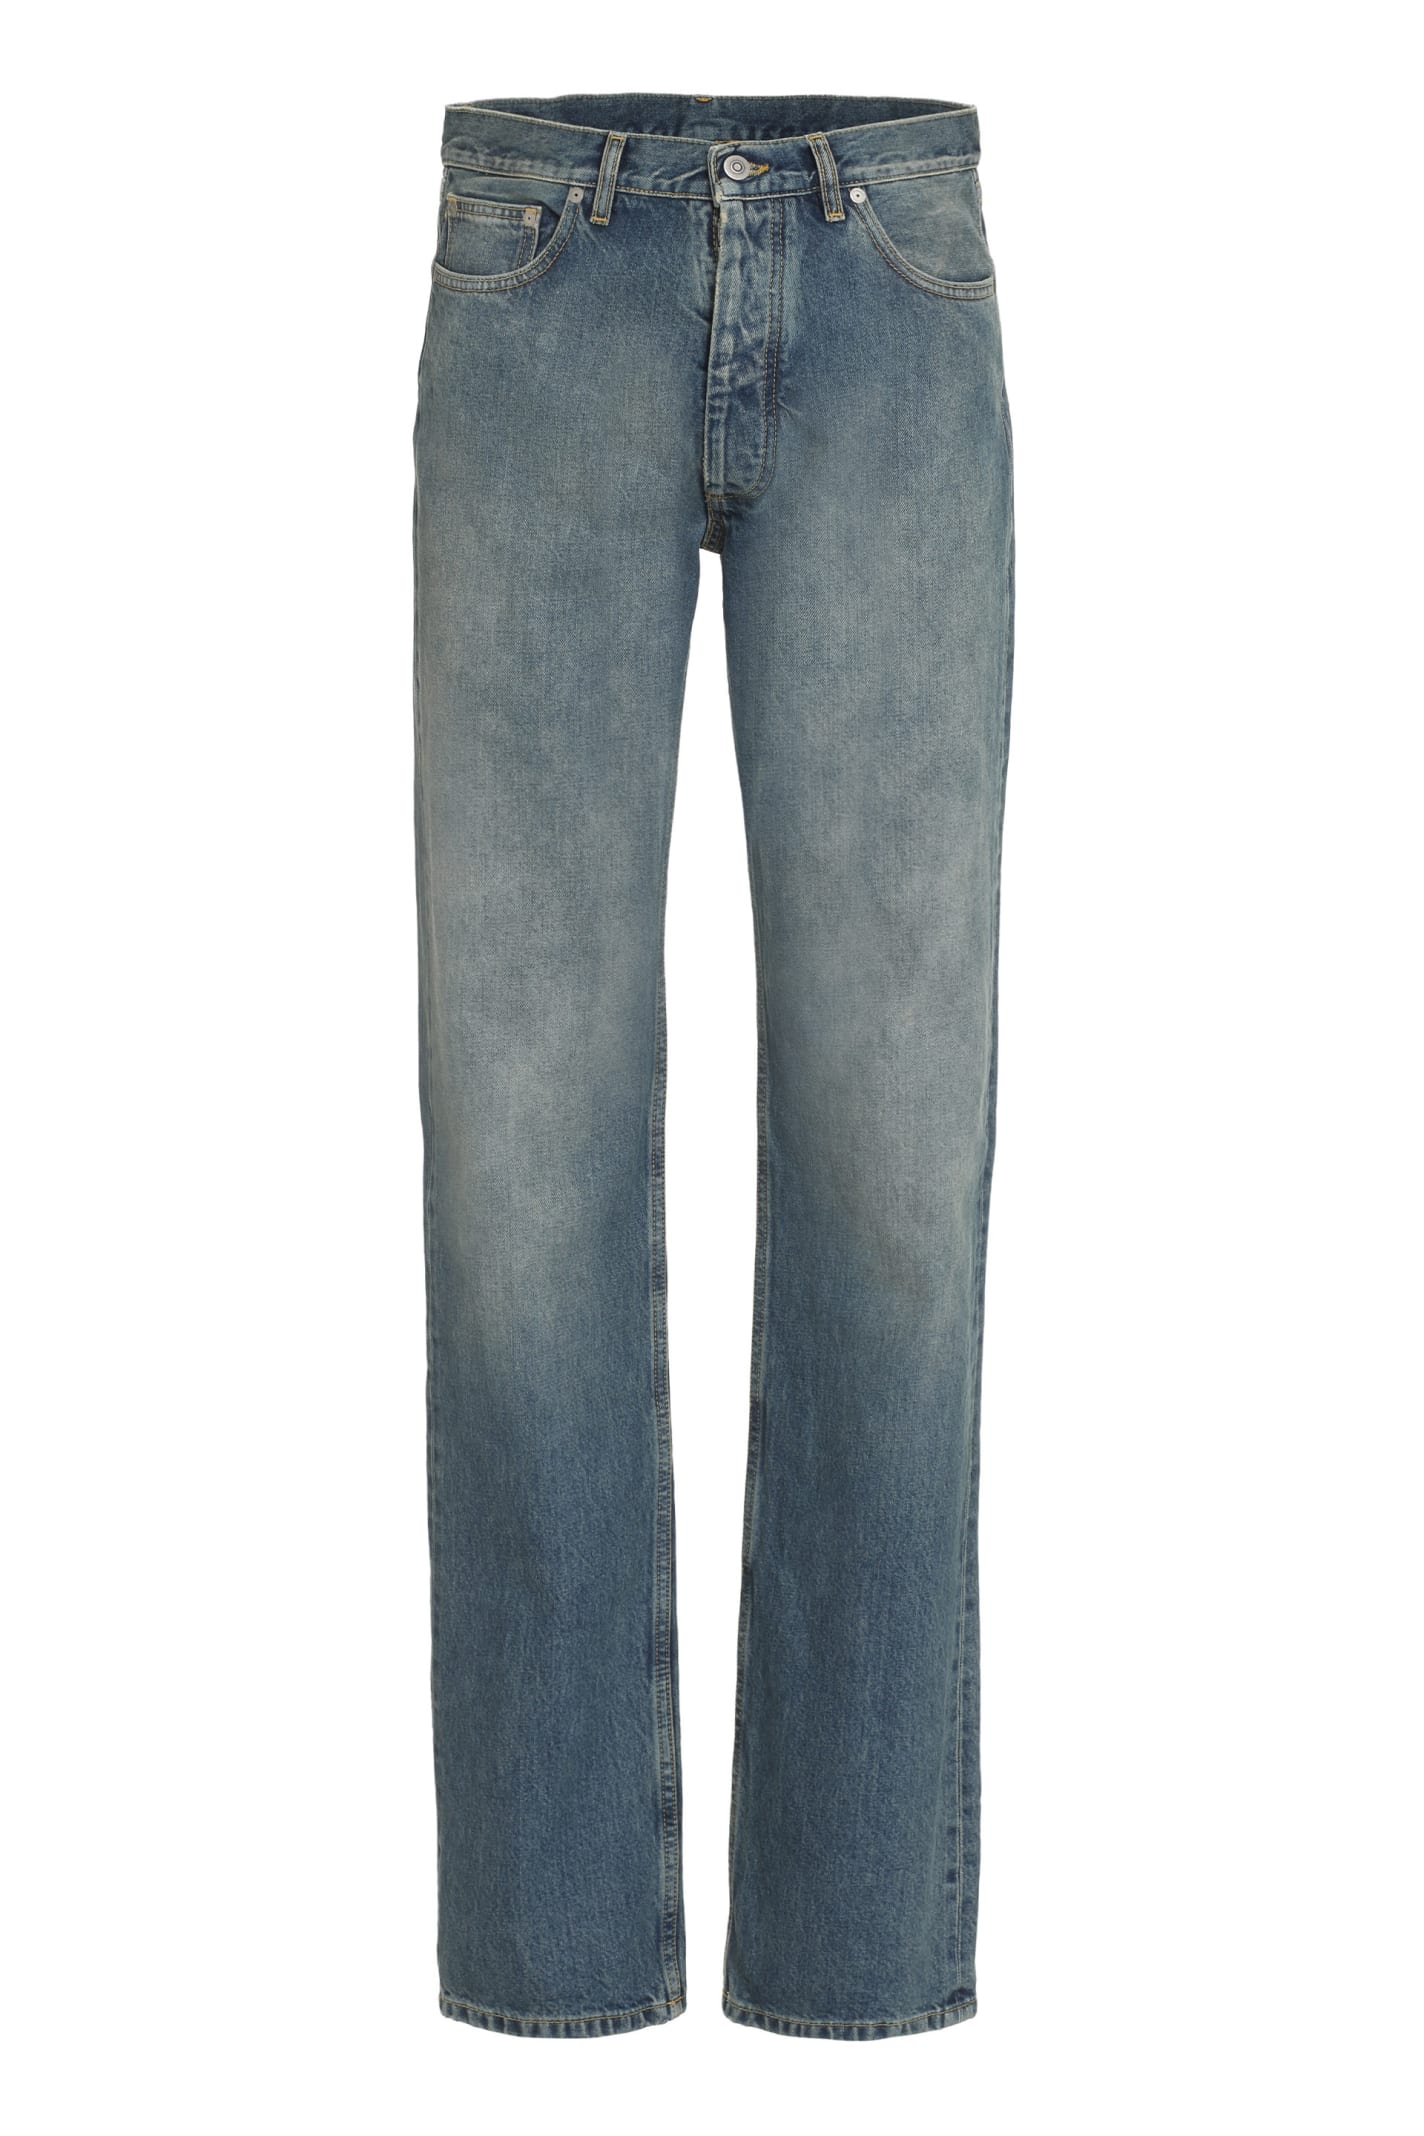 Maison Margiela 5-pocket Slim Fit Jeans